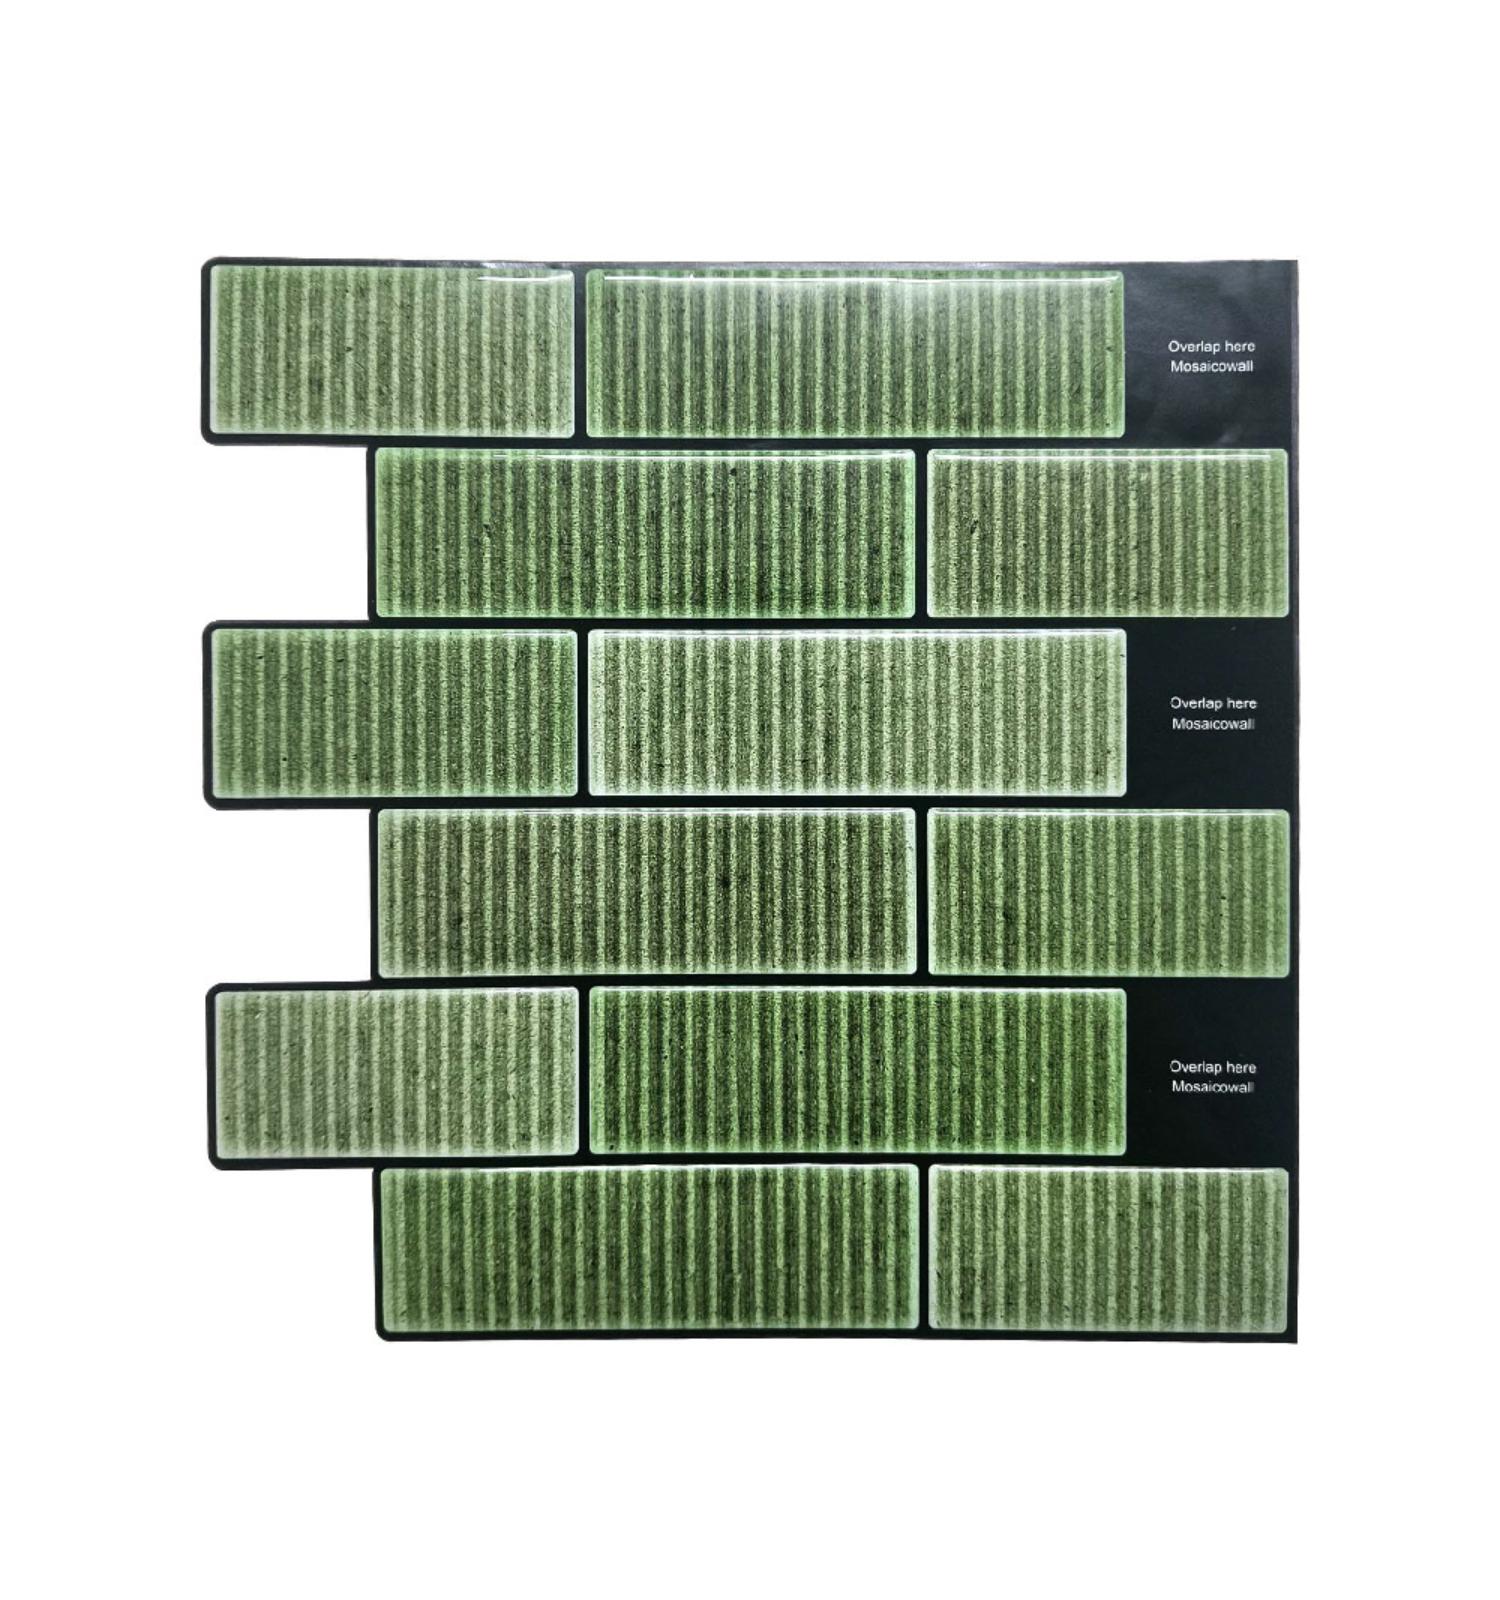 Olive Green Subway Peel and Stick Wall Tile | Kitchen Backsplash Tiles | Self Adhesive Tiles For Home Decor